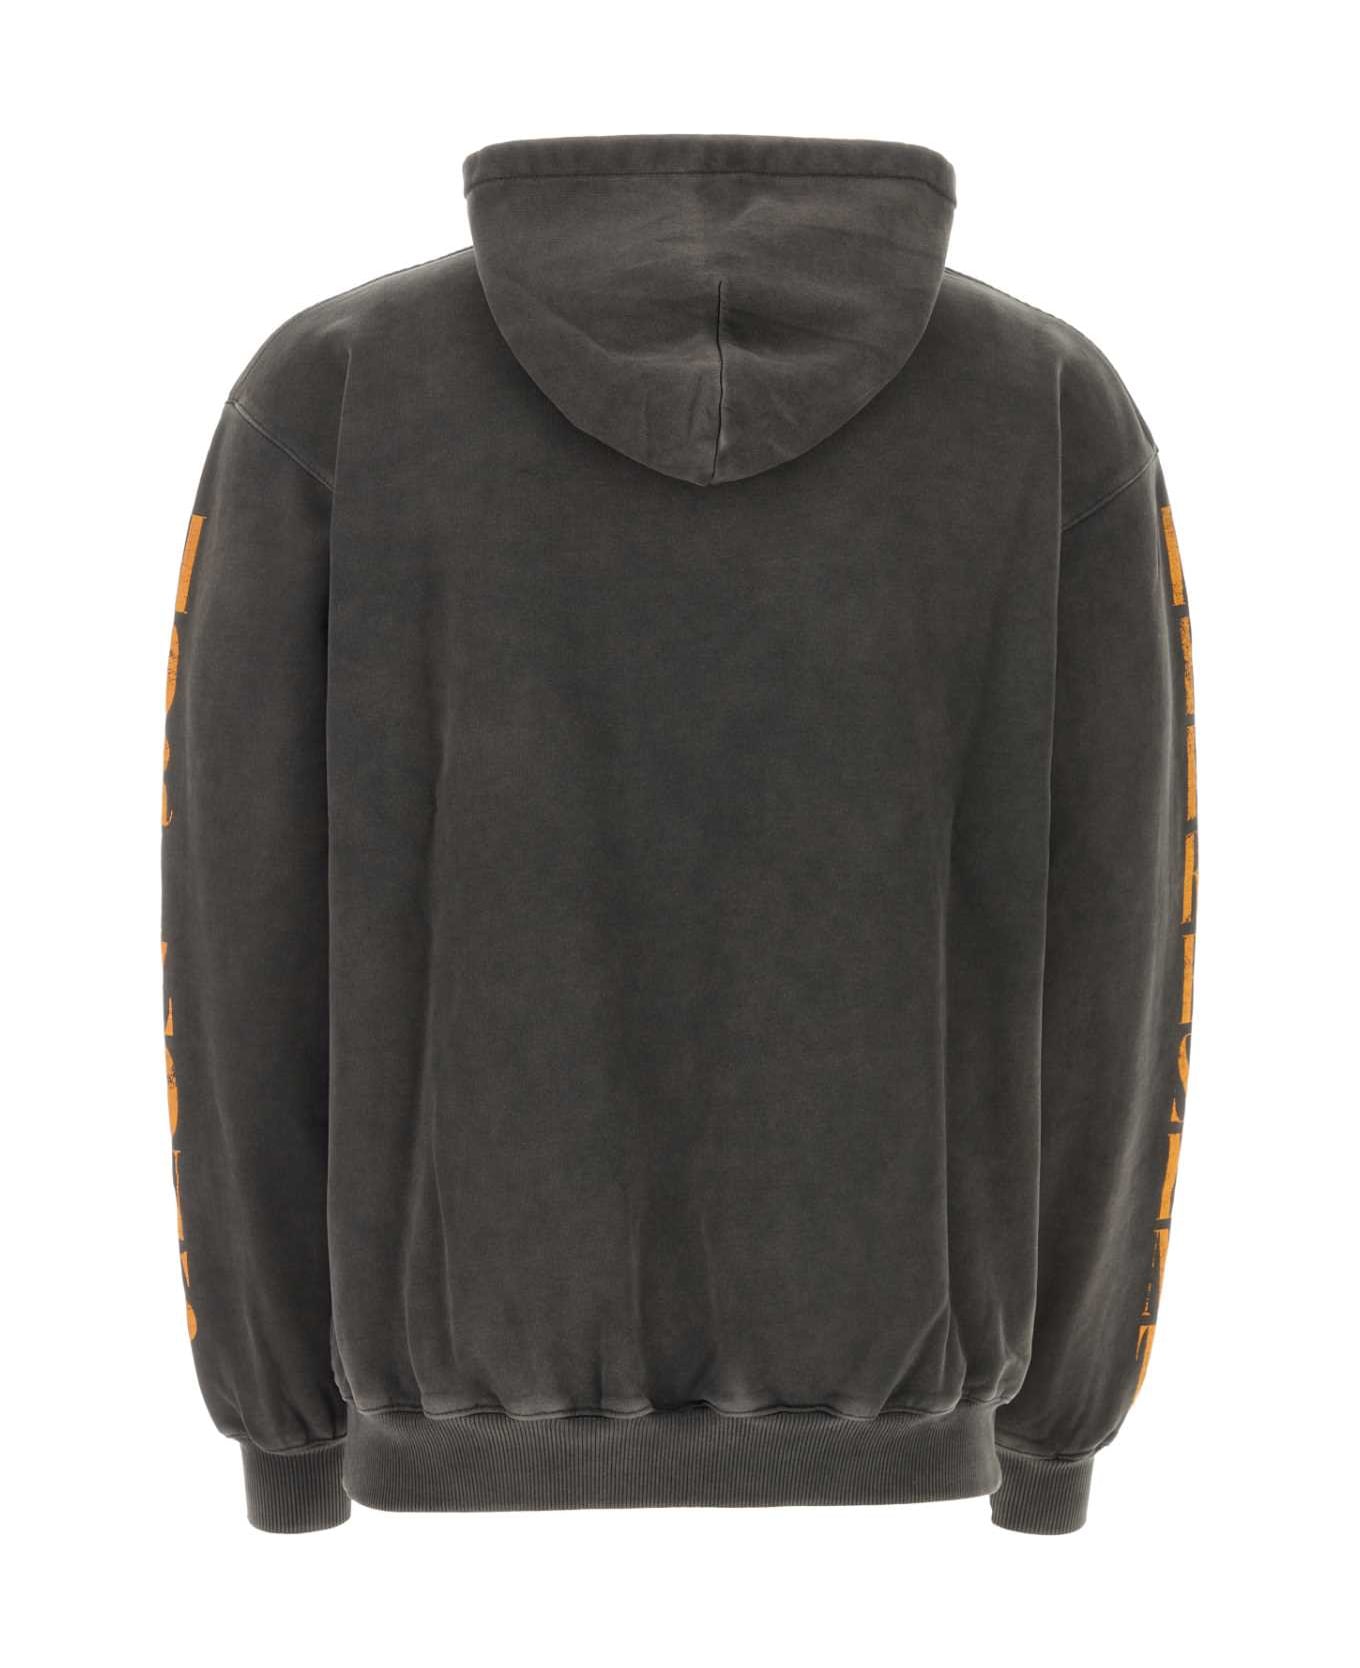 REPRESENT Black Cotton Sweatshirt - AGEDBLACK